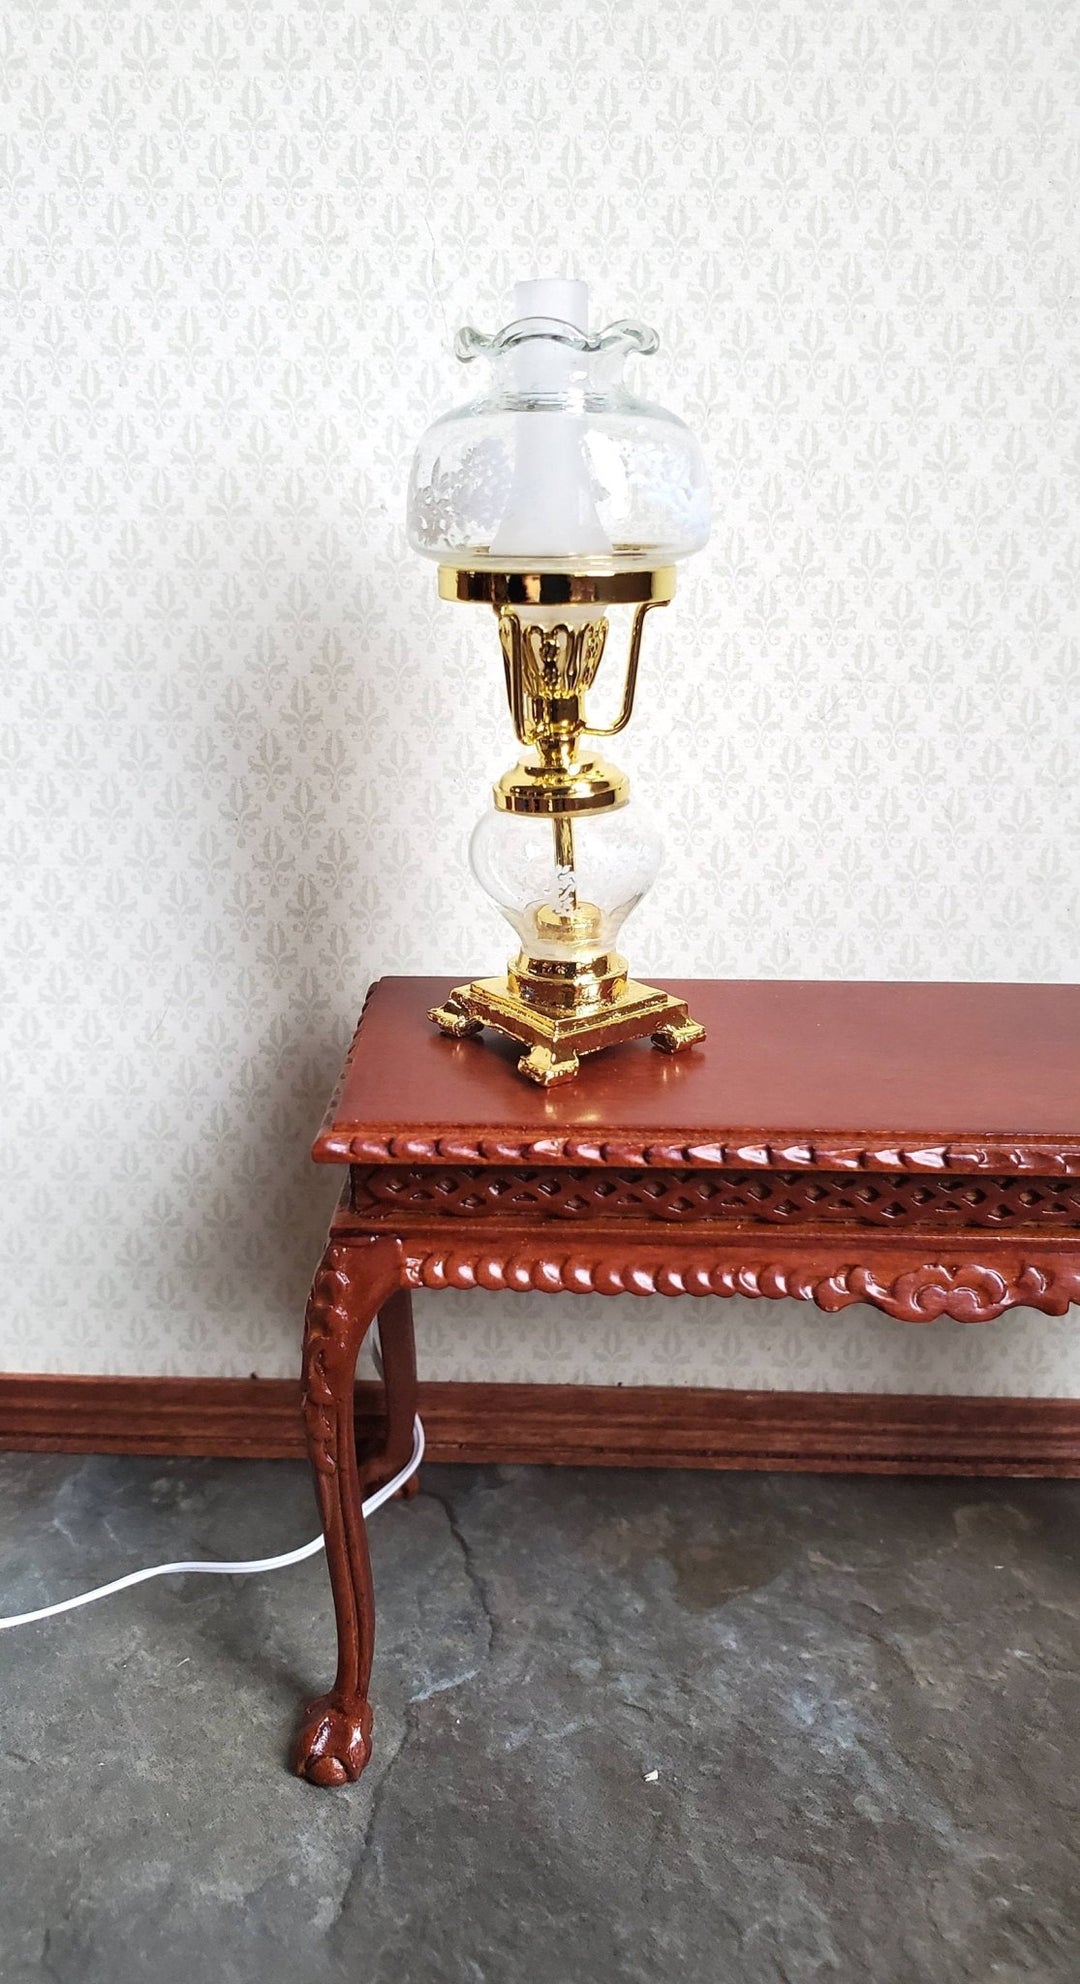 Dollhouse Hurricane Oil Lamp 12 Volt Light 1:12 Scale Miniature Vintage Style Gold - Miniature Crush